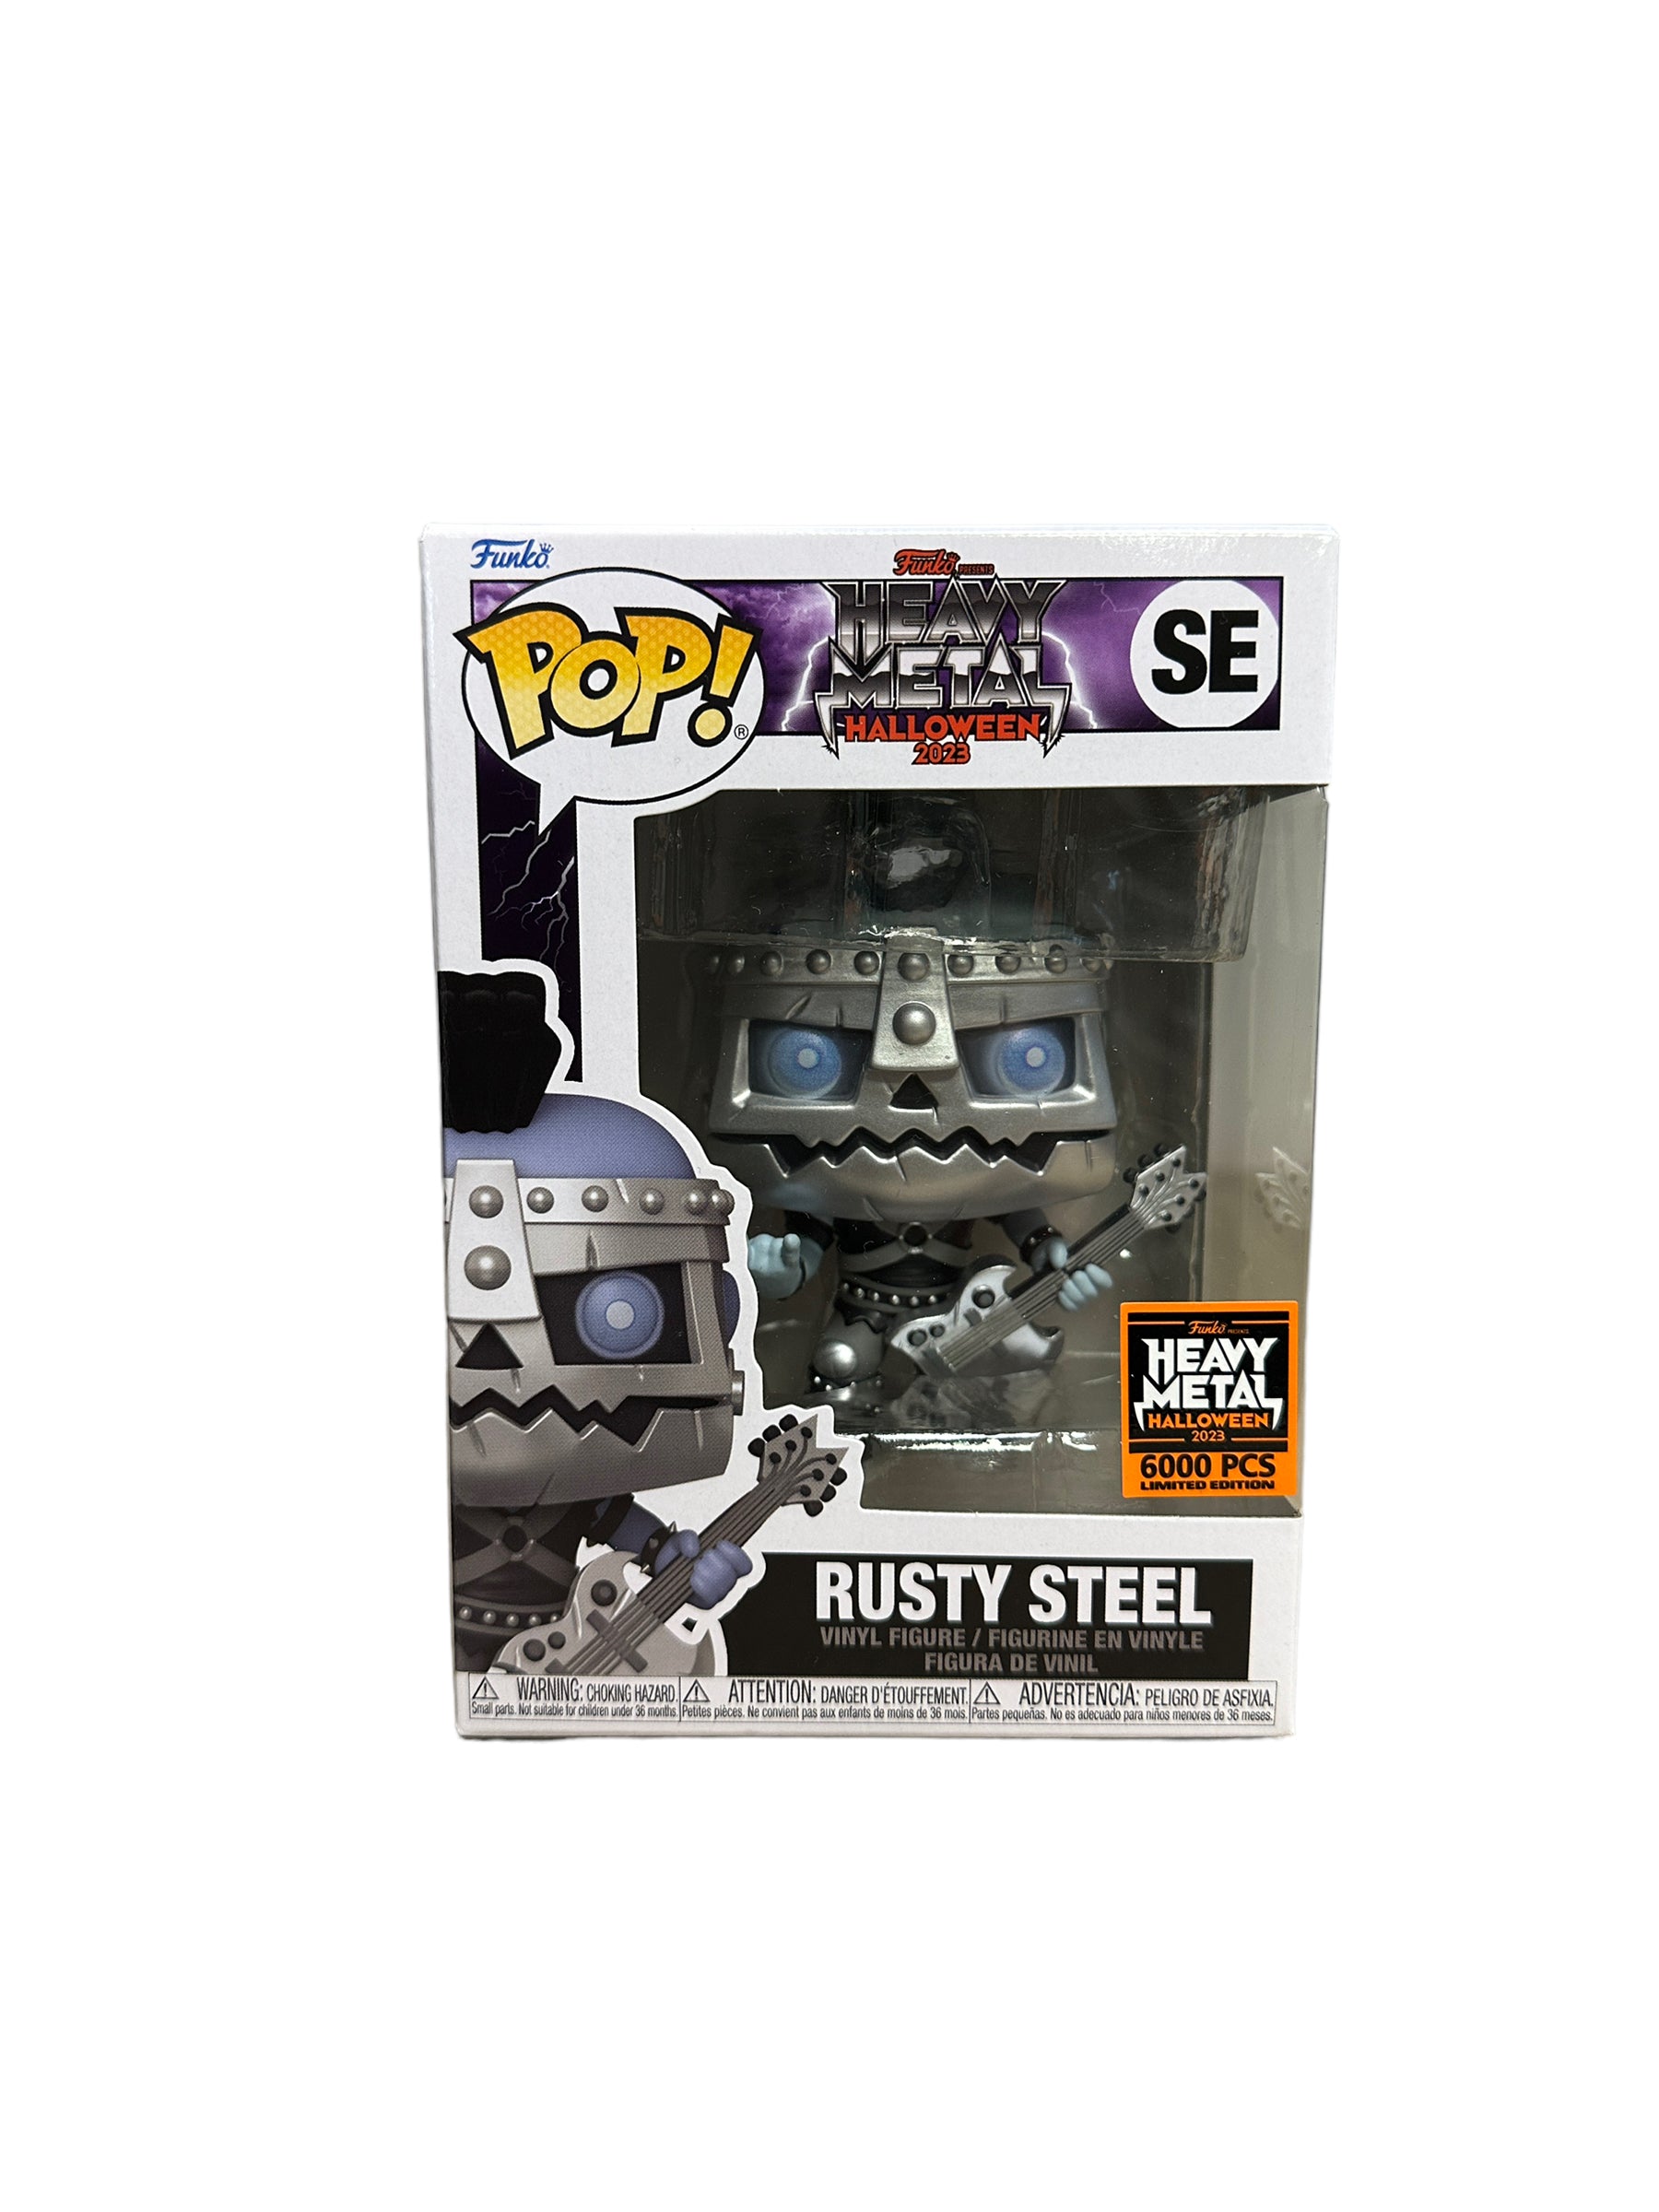 Rusty Steel Funko Pop! - Heavy Metal Halloween 2023 Exclusive LE6000 Pcs - Condition 8.5/10